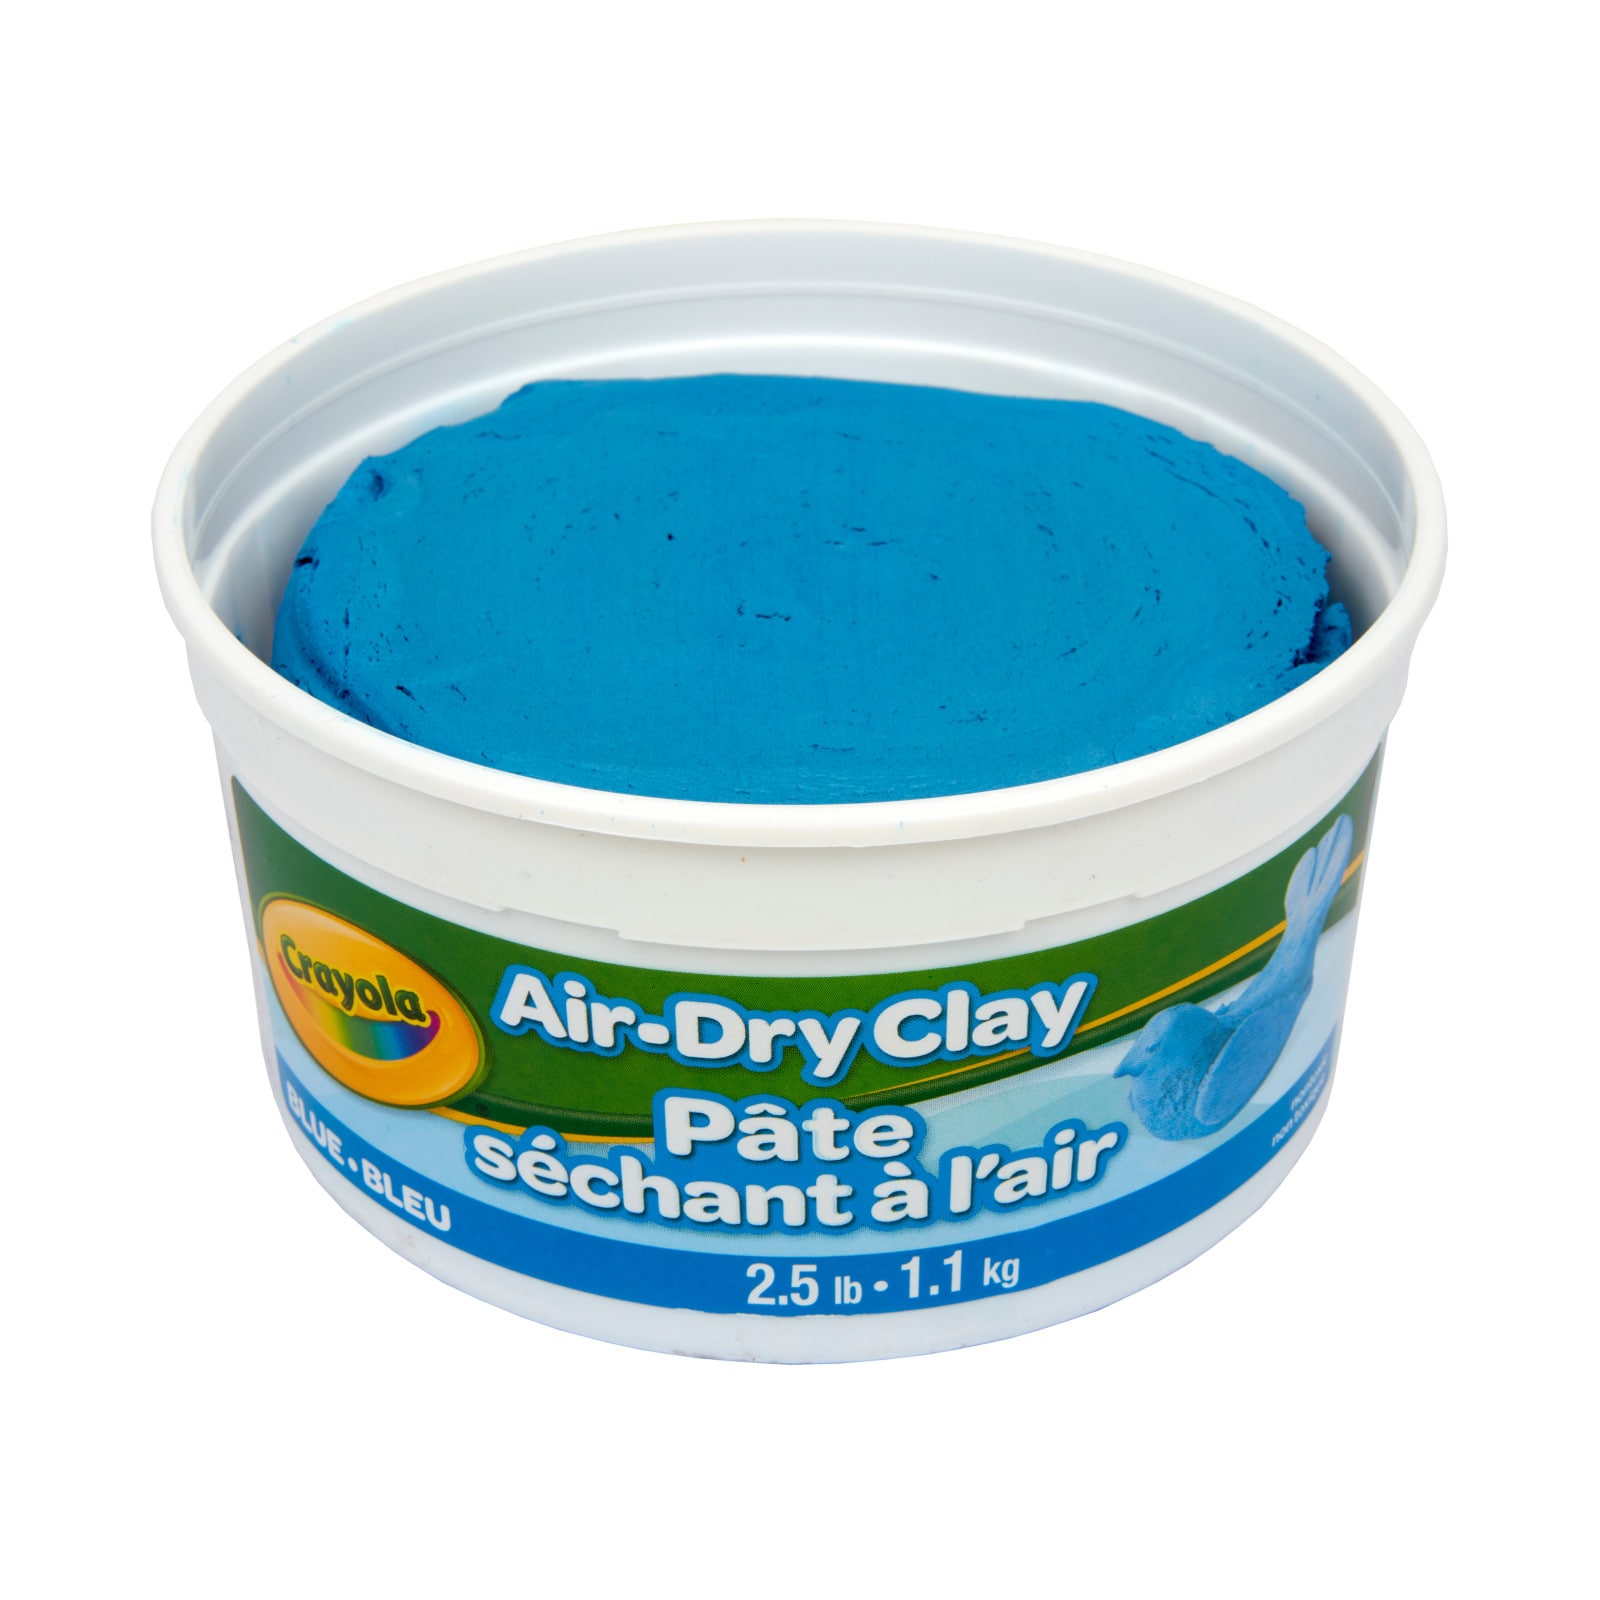 Crayola Air-Dry Clay, White – Crayola Canada